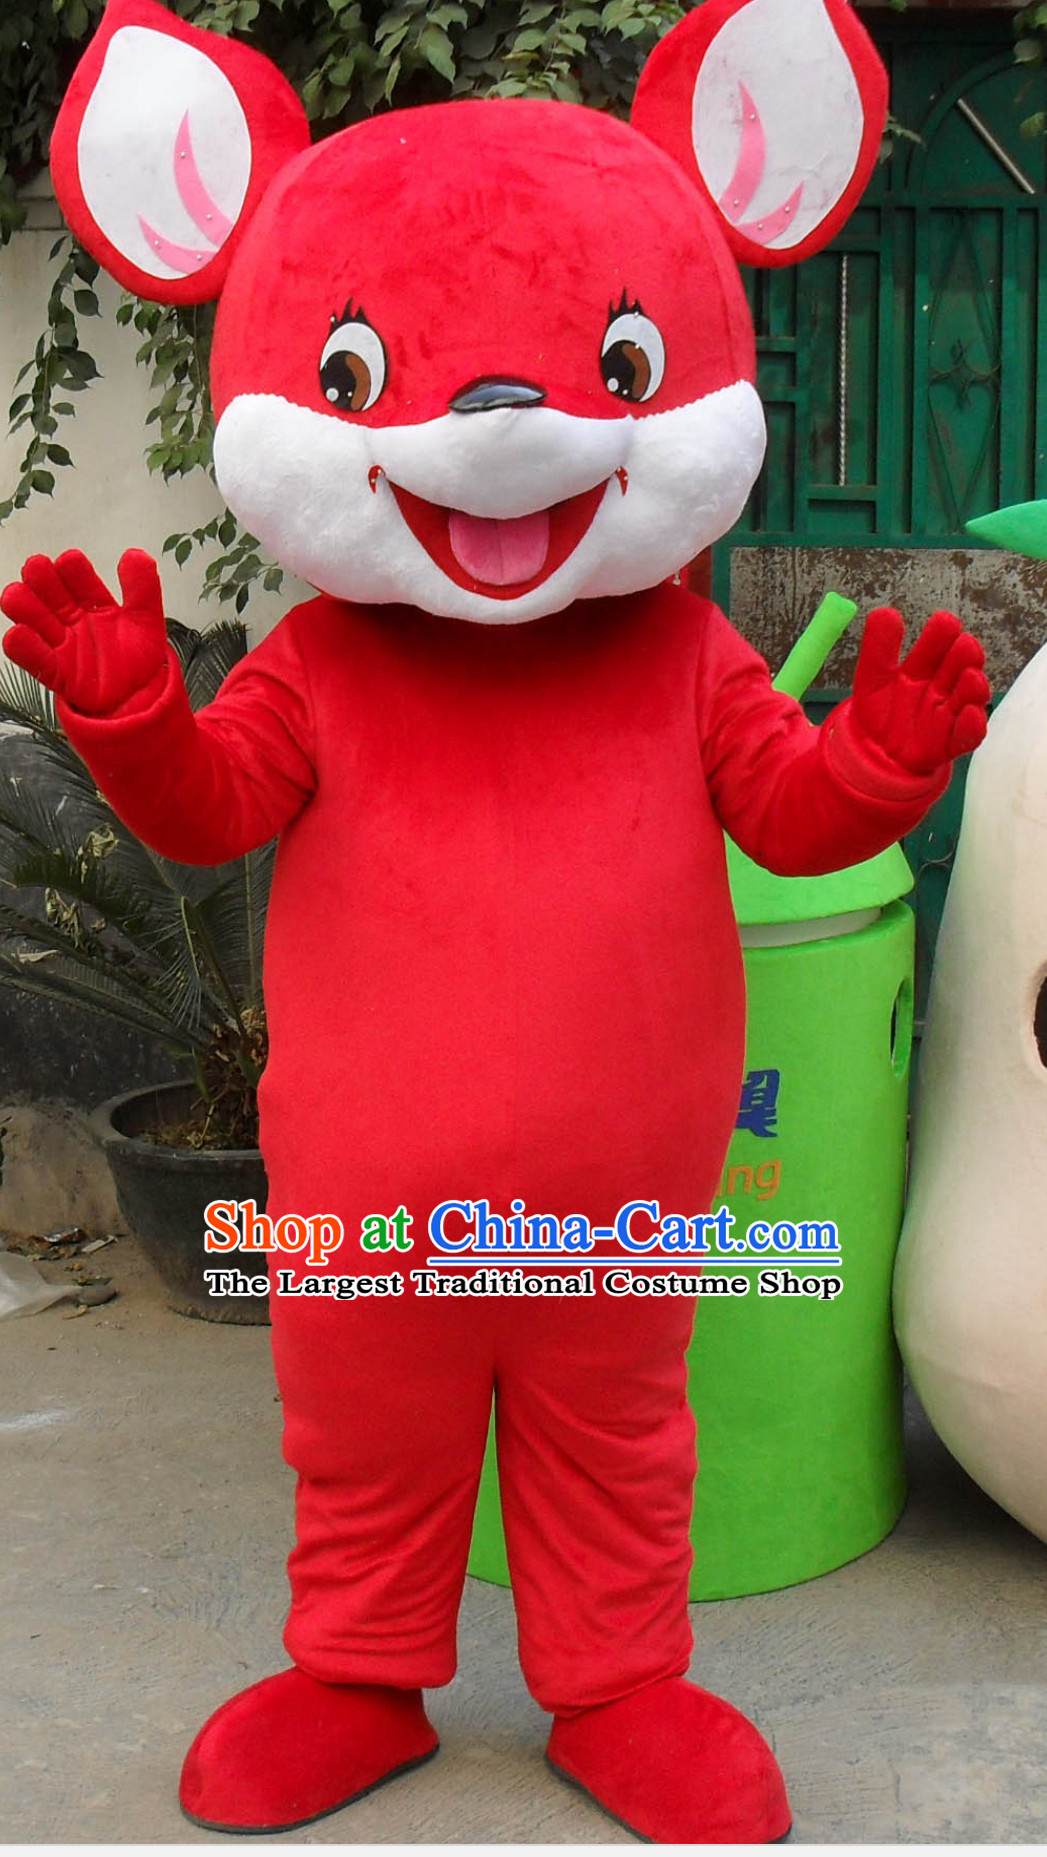 Lucky Red Chinese 2020 Rat Year Mascot Costume